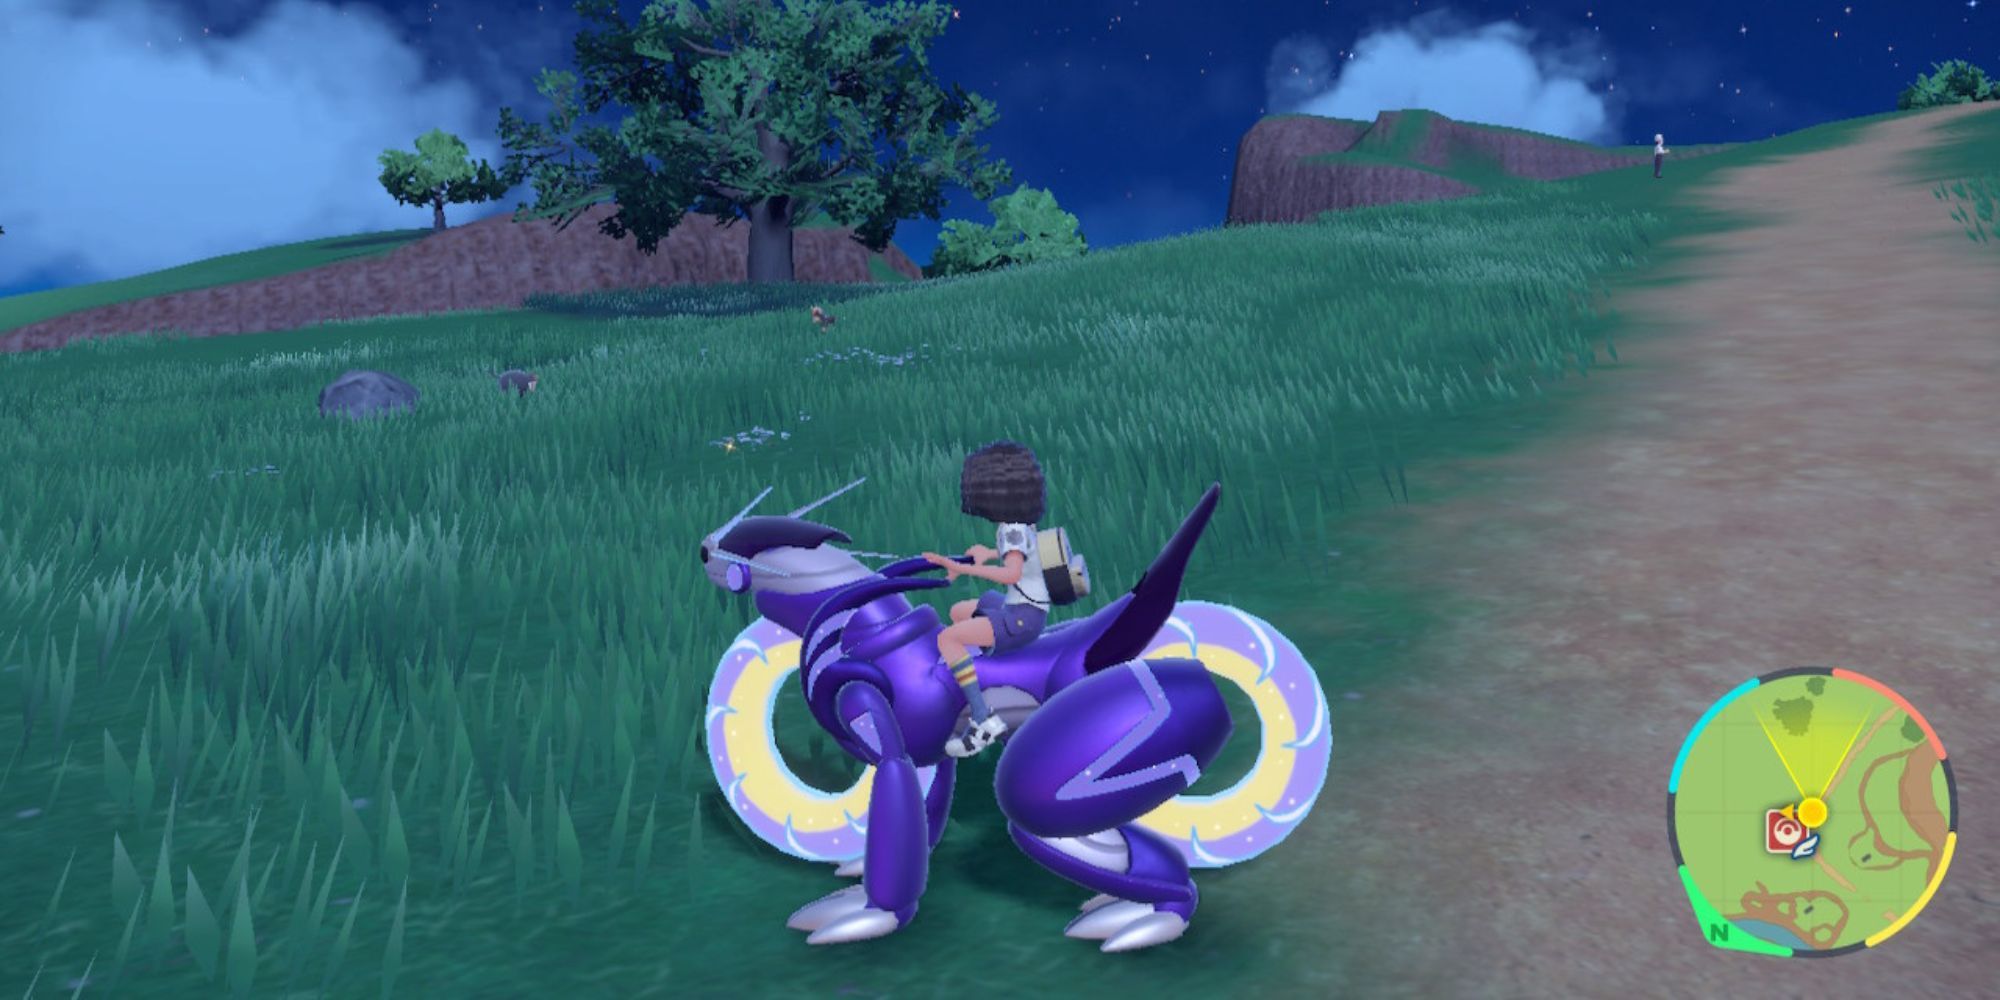 player riding Miraidon in field